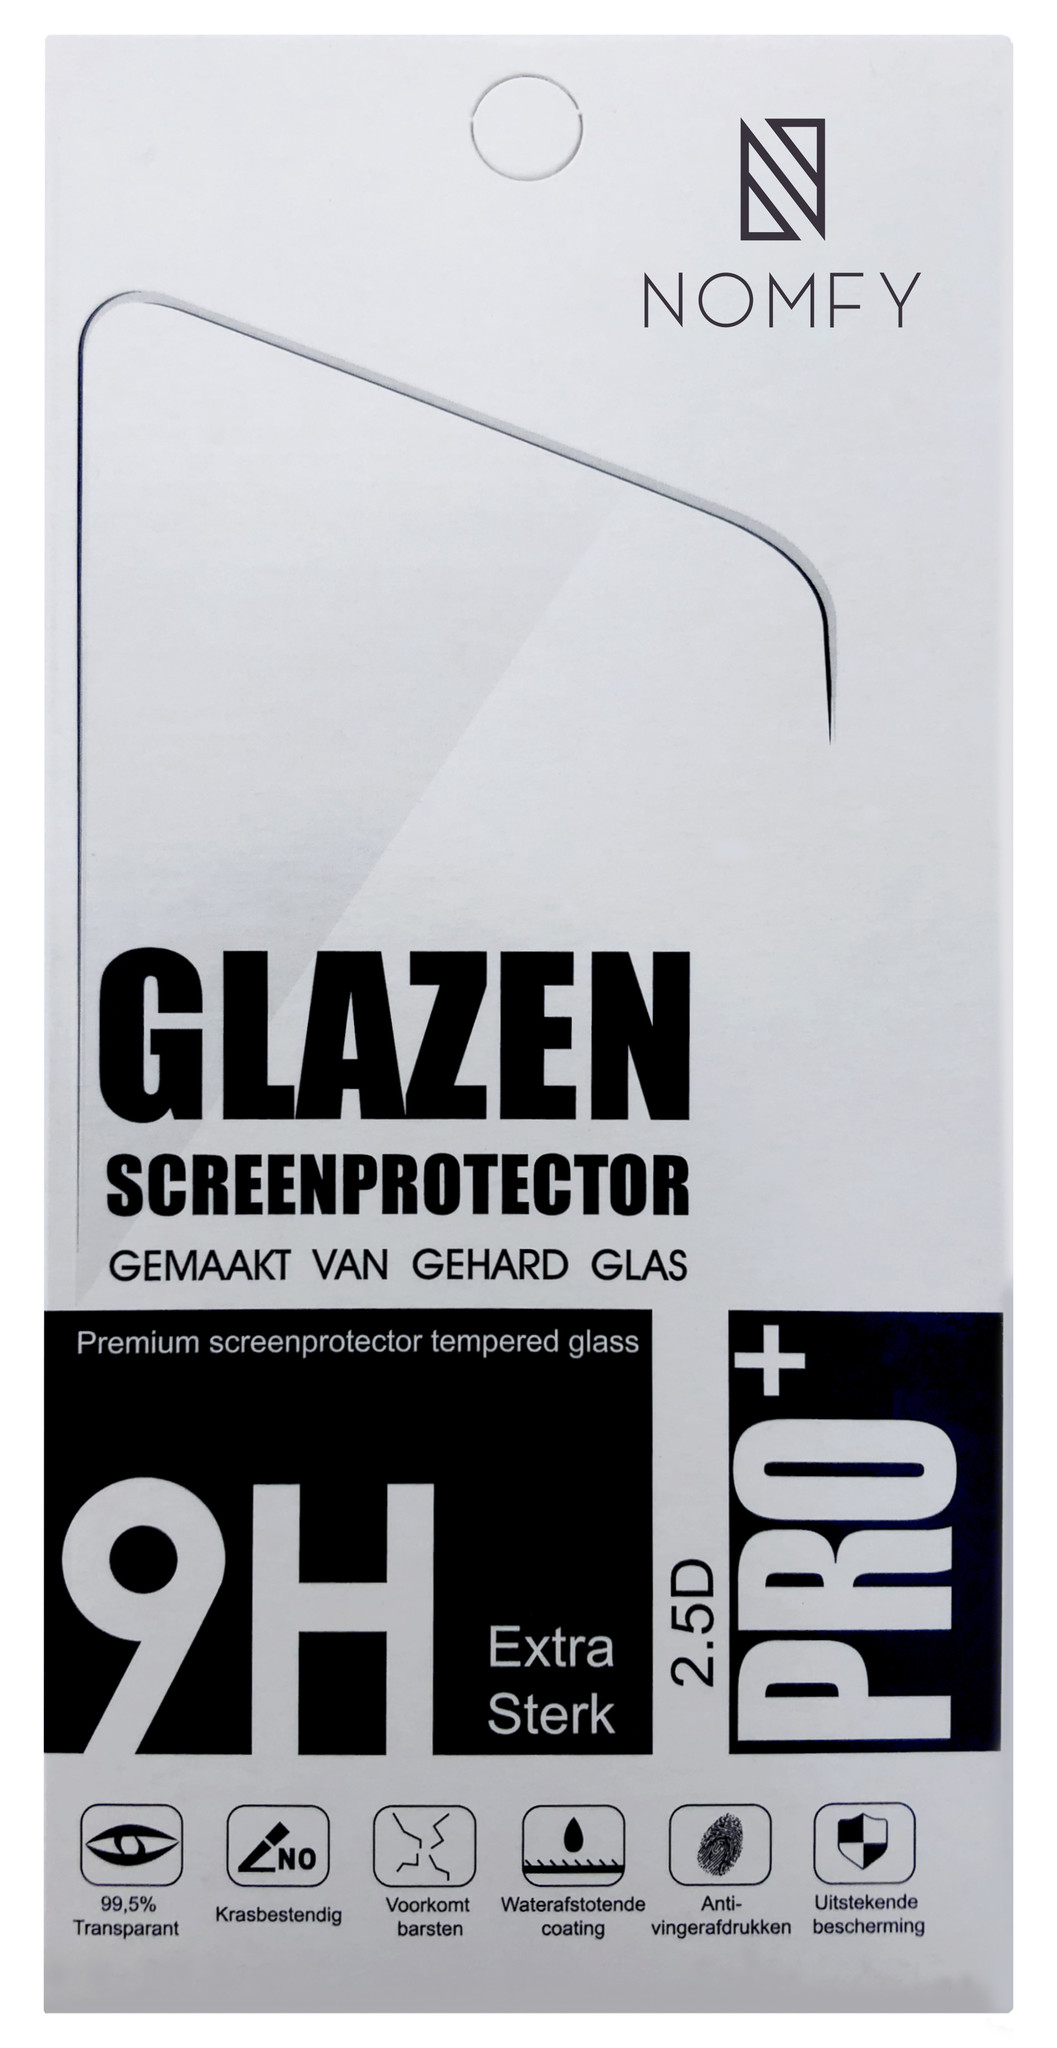 Nomfy OPPO A78 Screenprotector Bescherm Glas Tempered Glass Full Cover - OPPO A78 Screen Protector - 3x